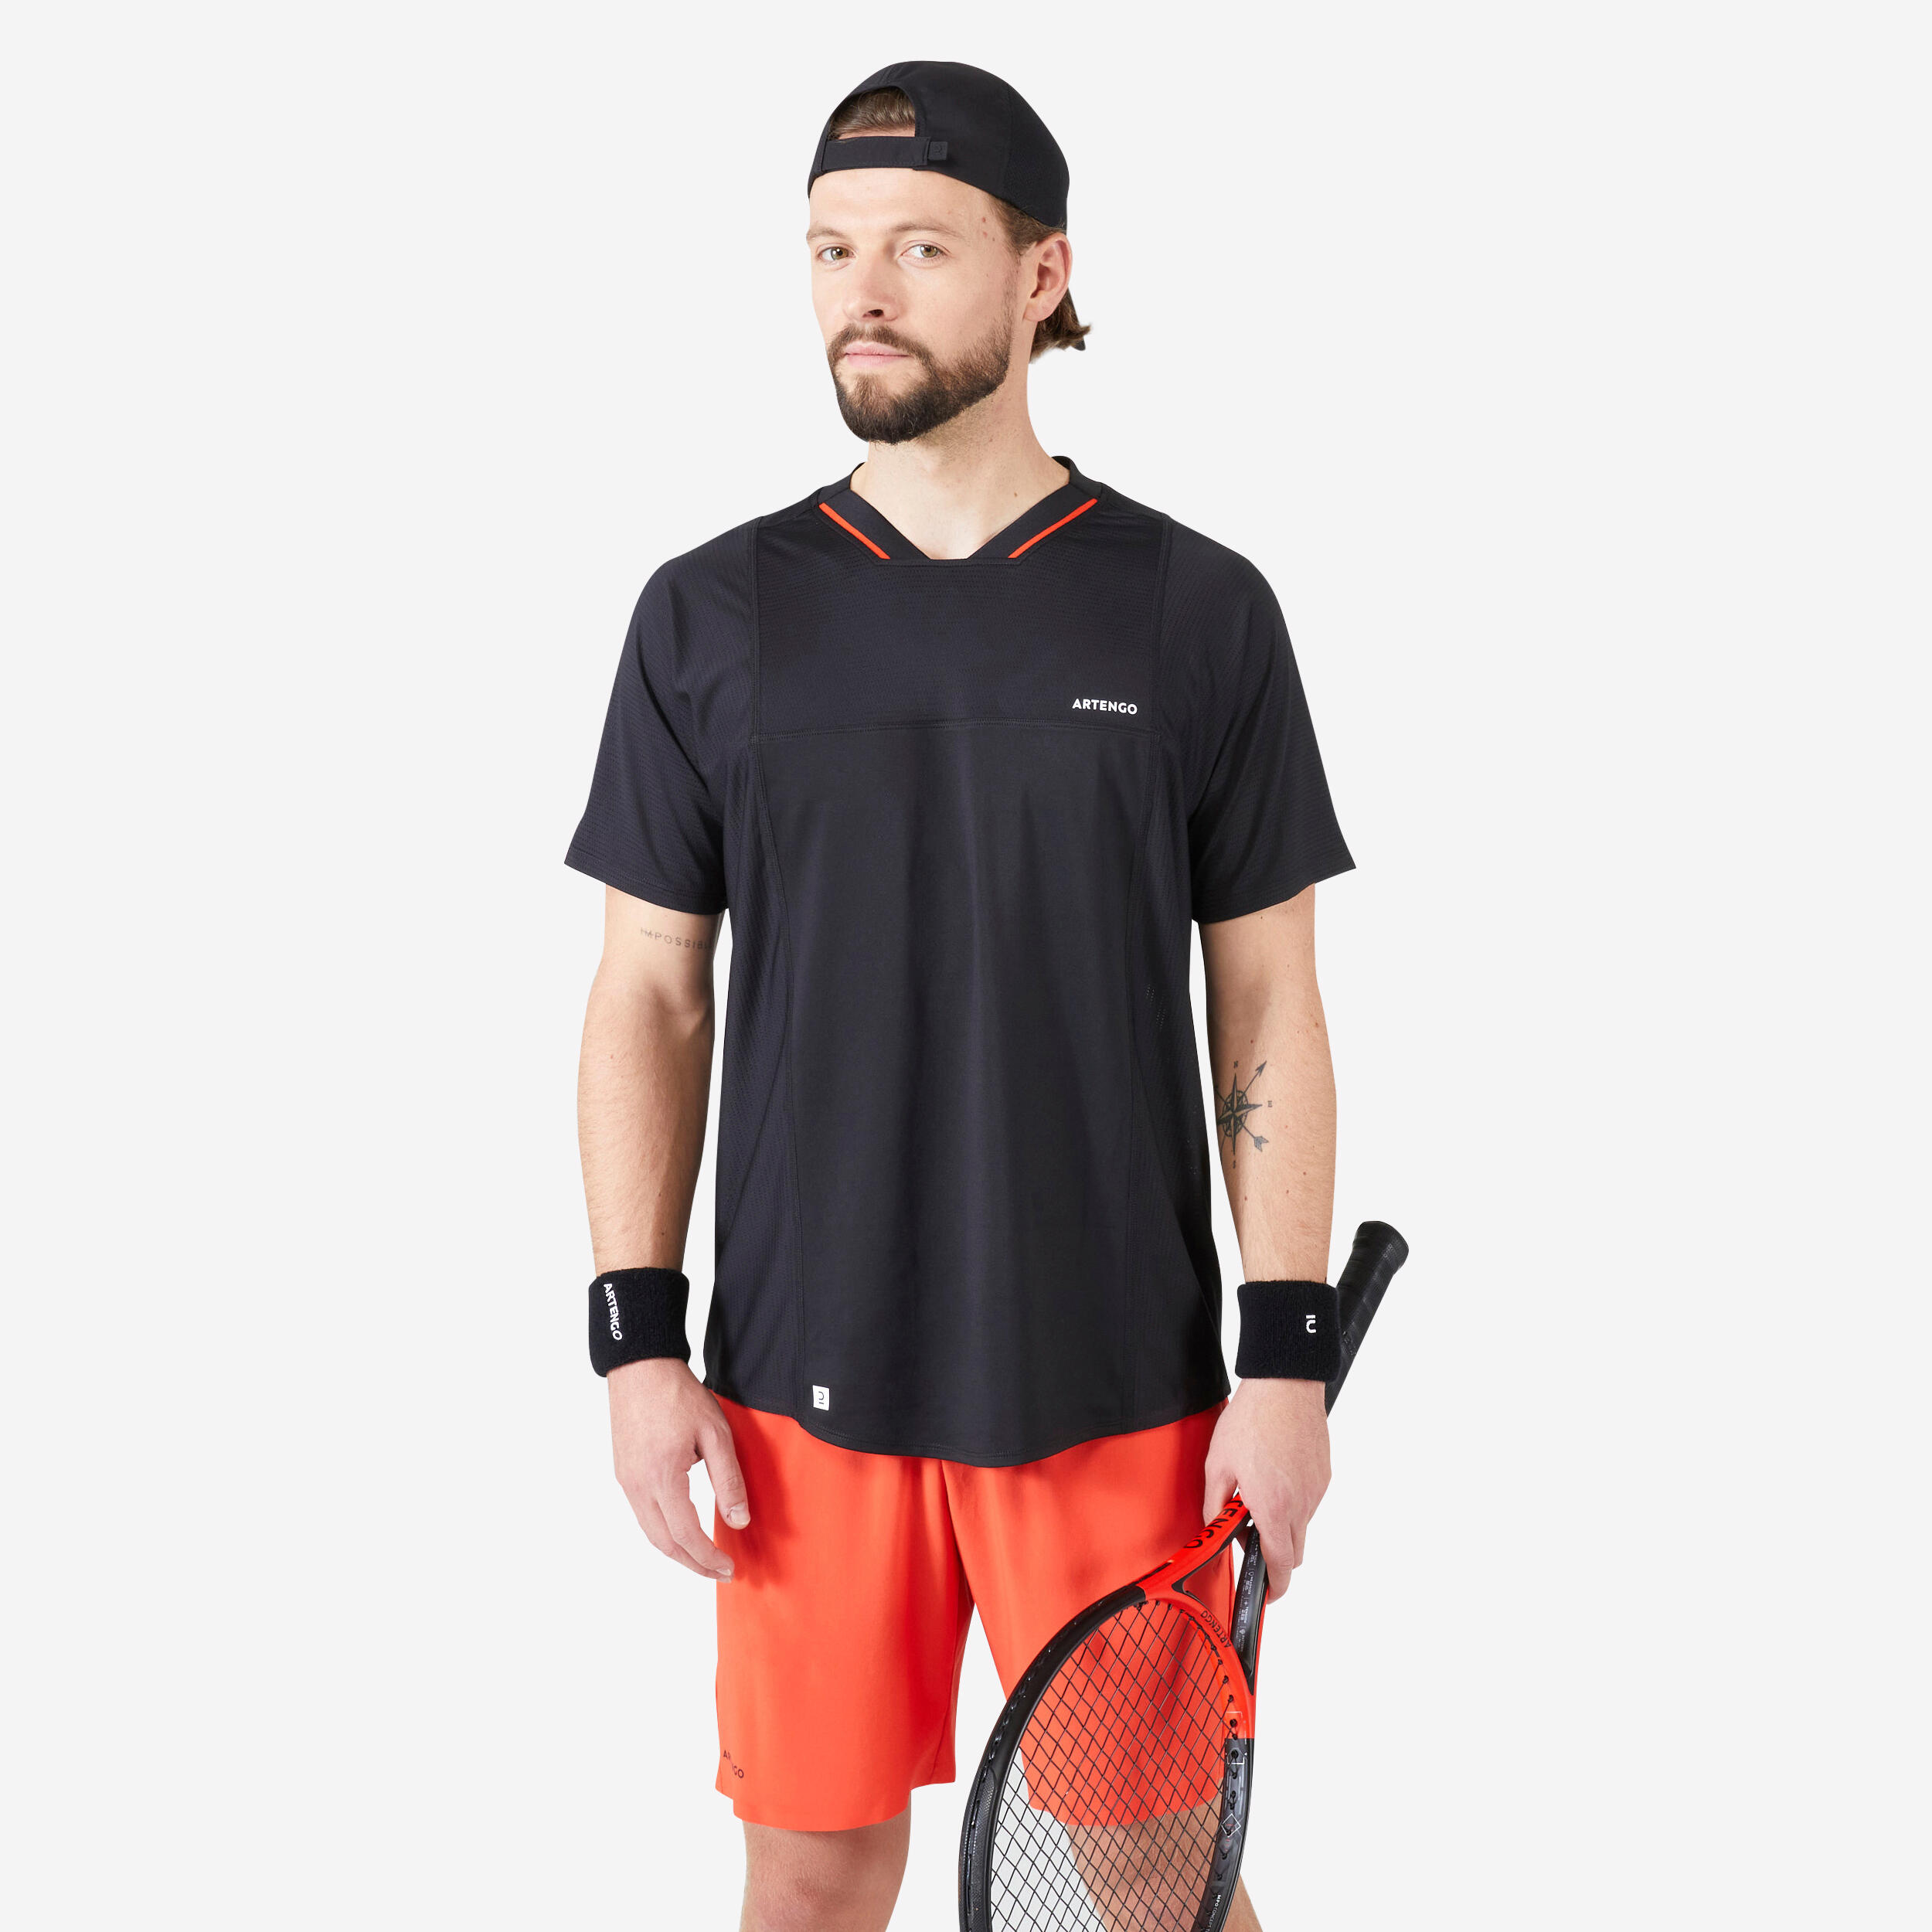 Men's Tennis T-Shirt - Dry VN Black/Red - ARTENGO